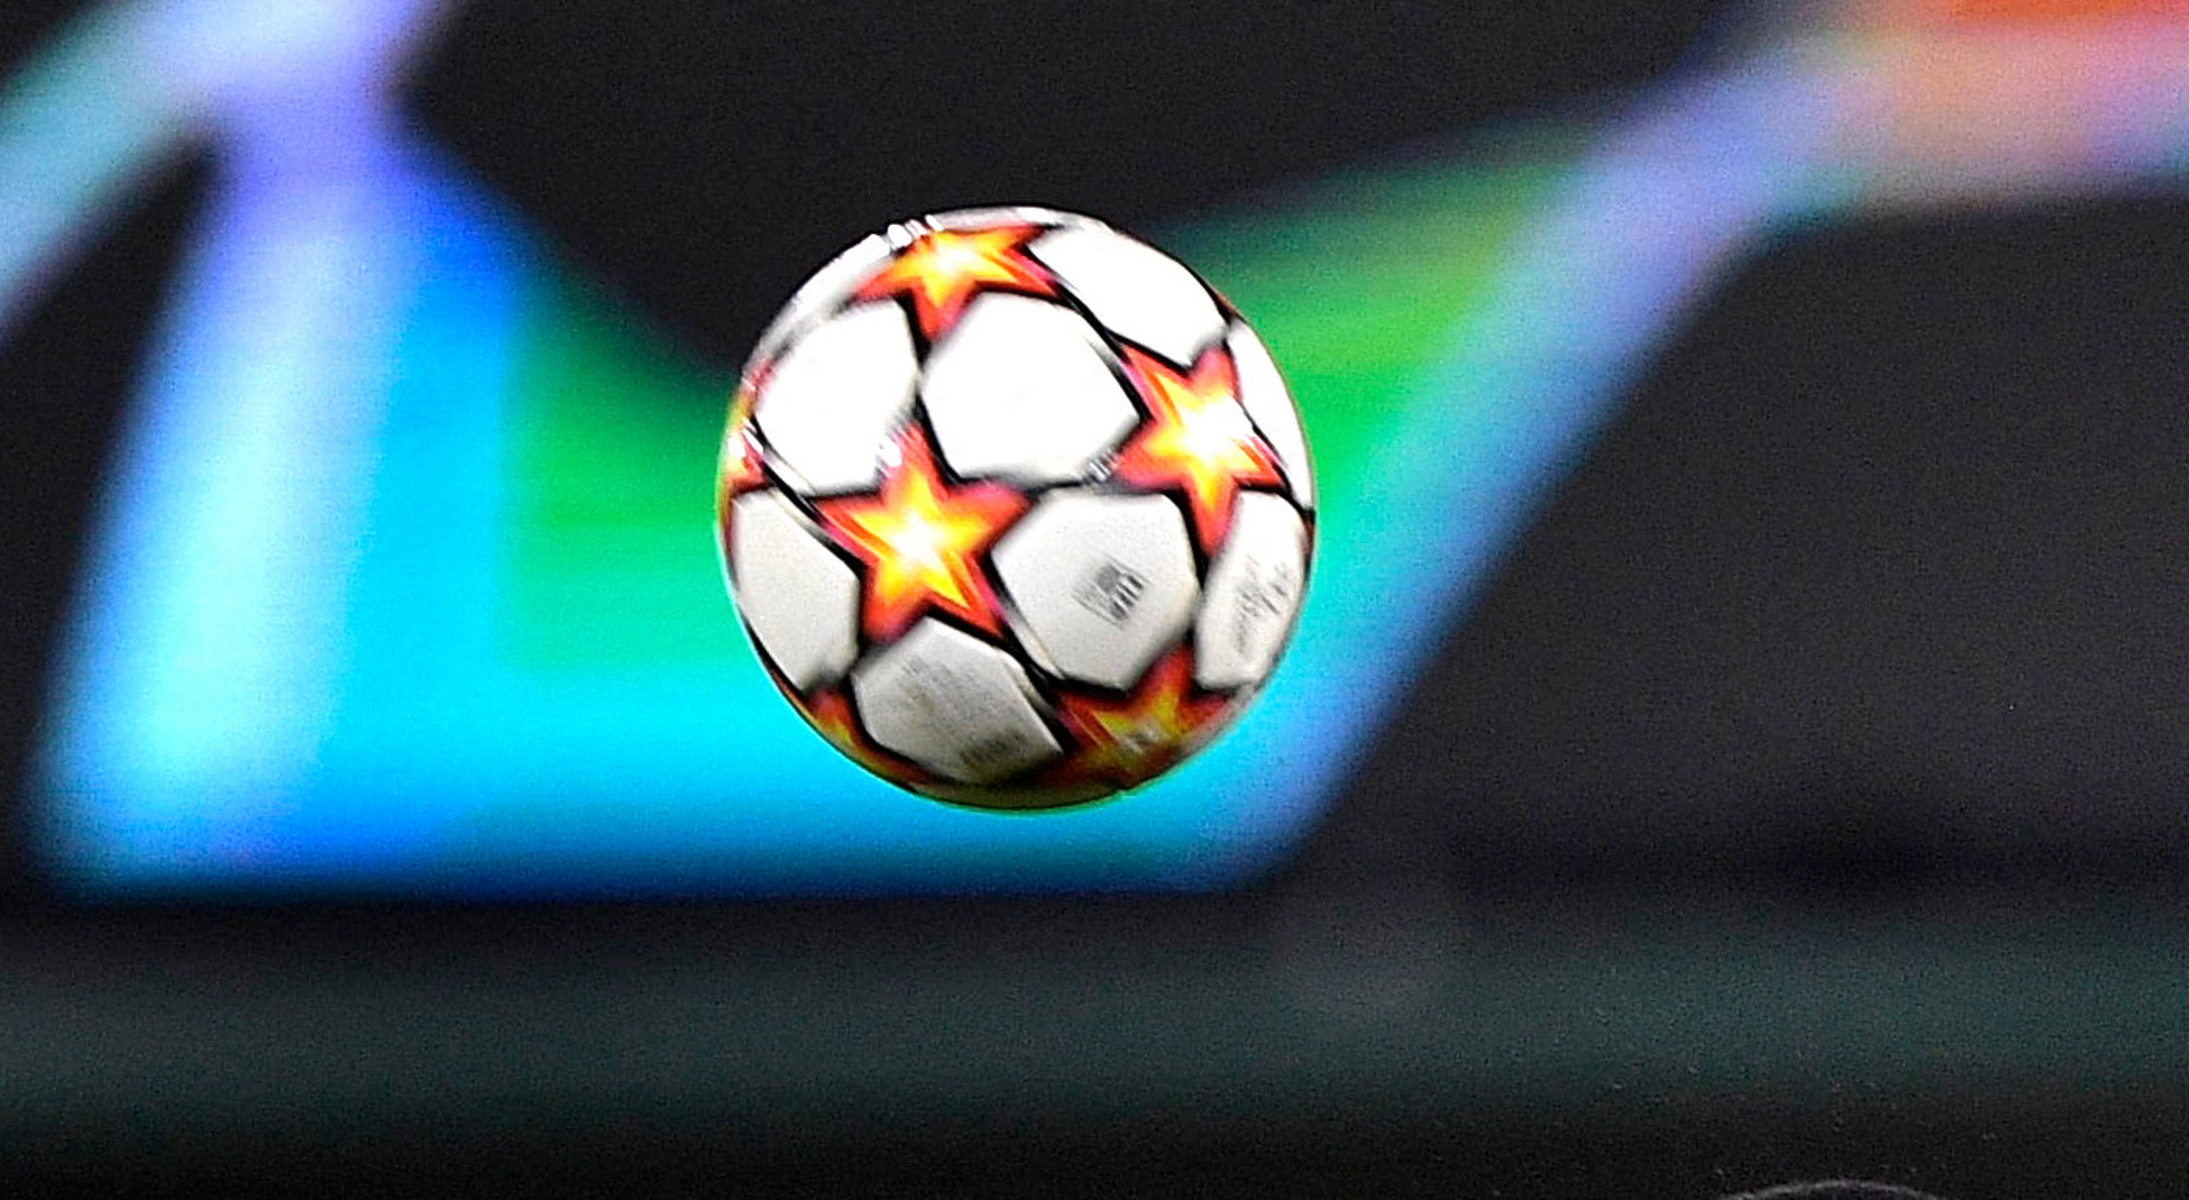 UEFA Champions League: Η φάση των play-offs ξεκινά αποκλειστικά στην COSMOTE TV